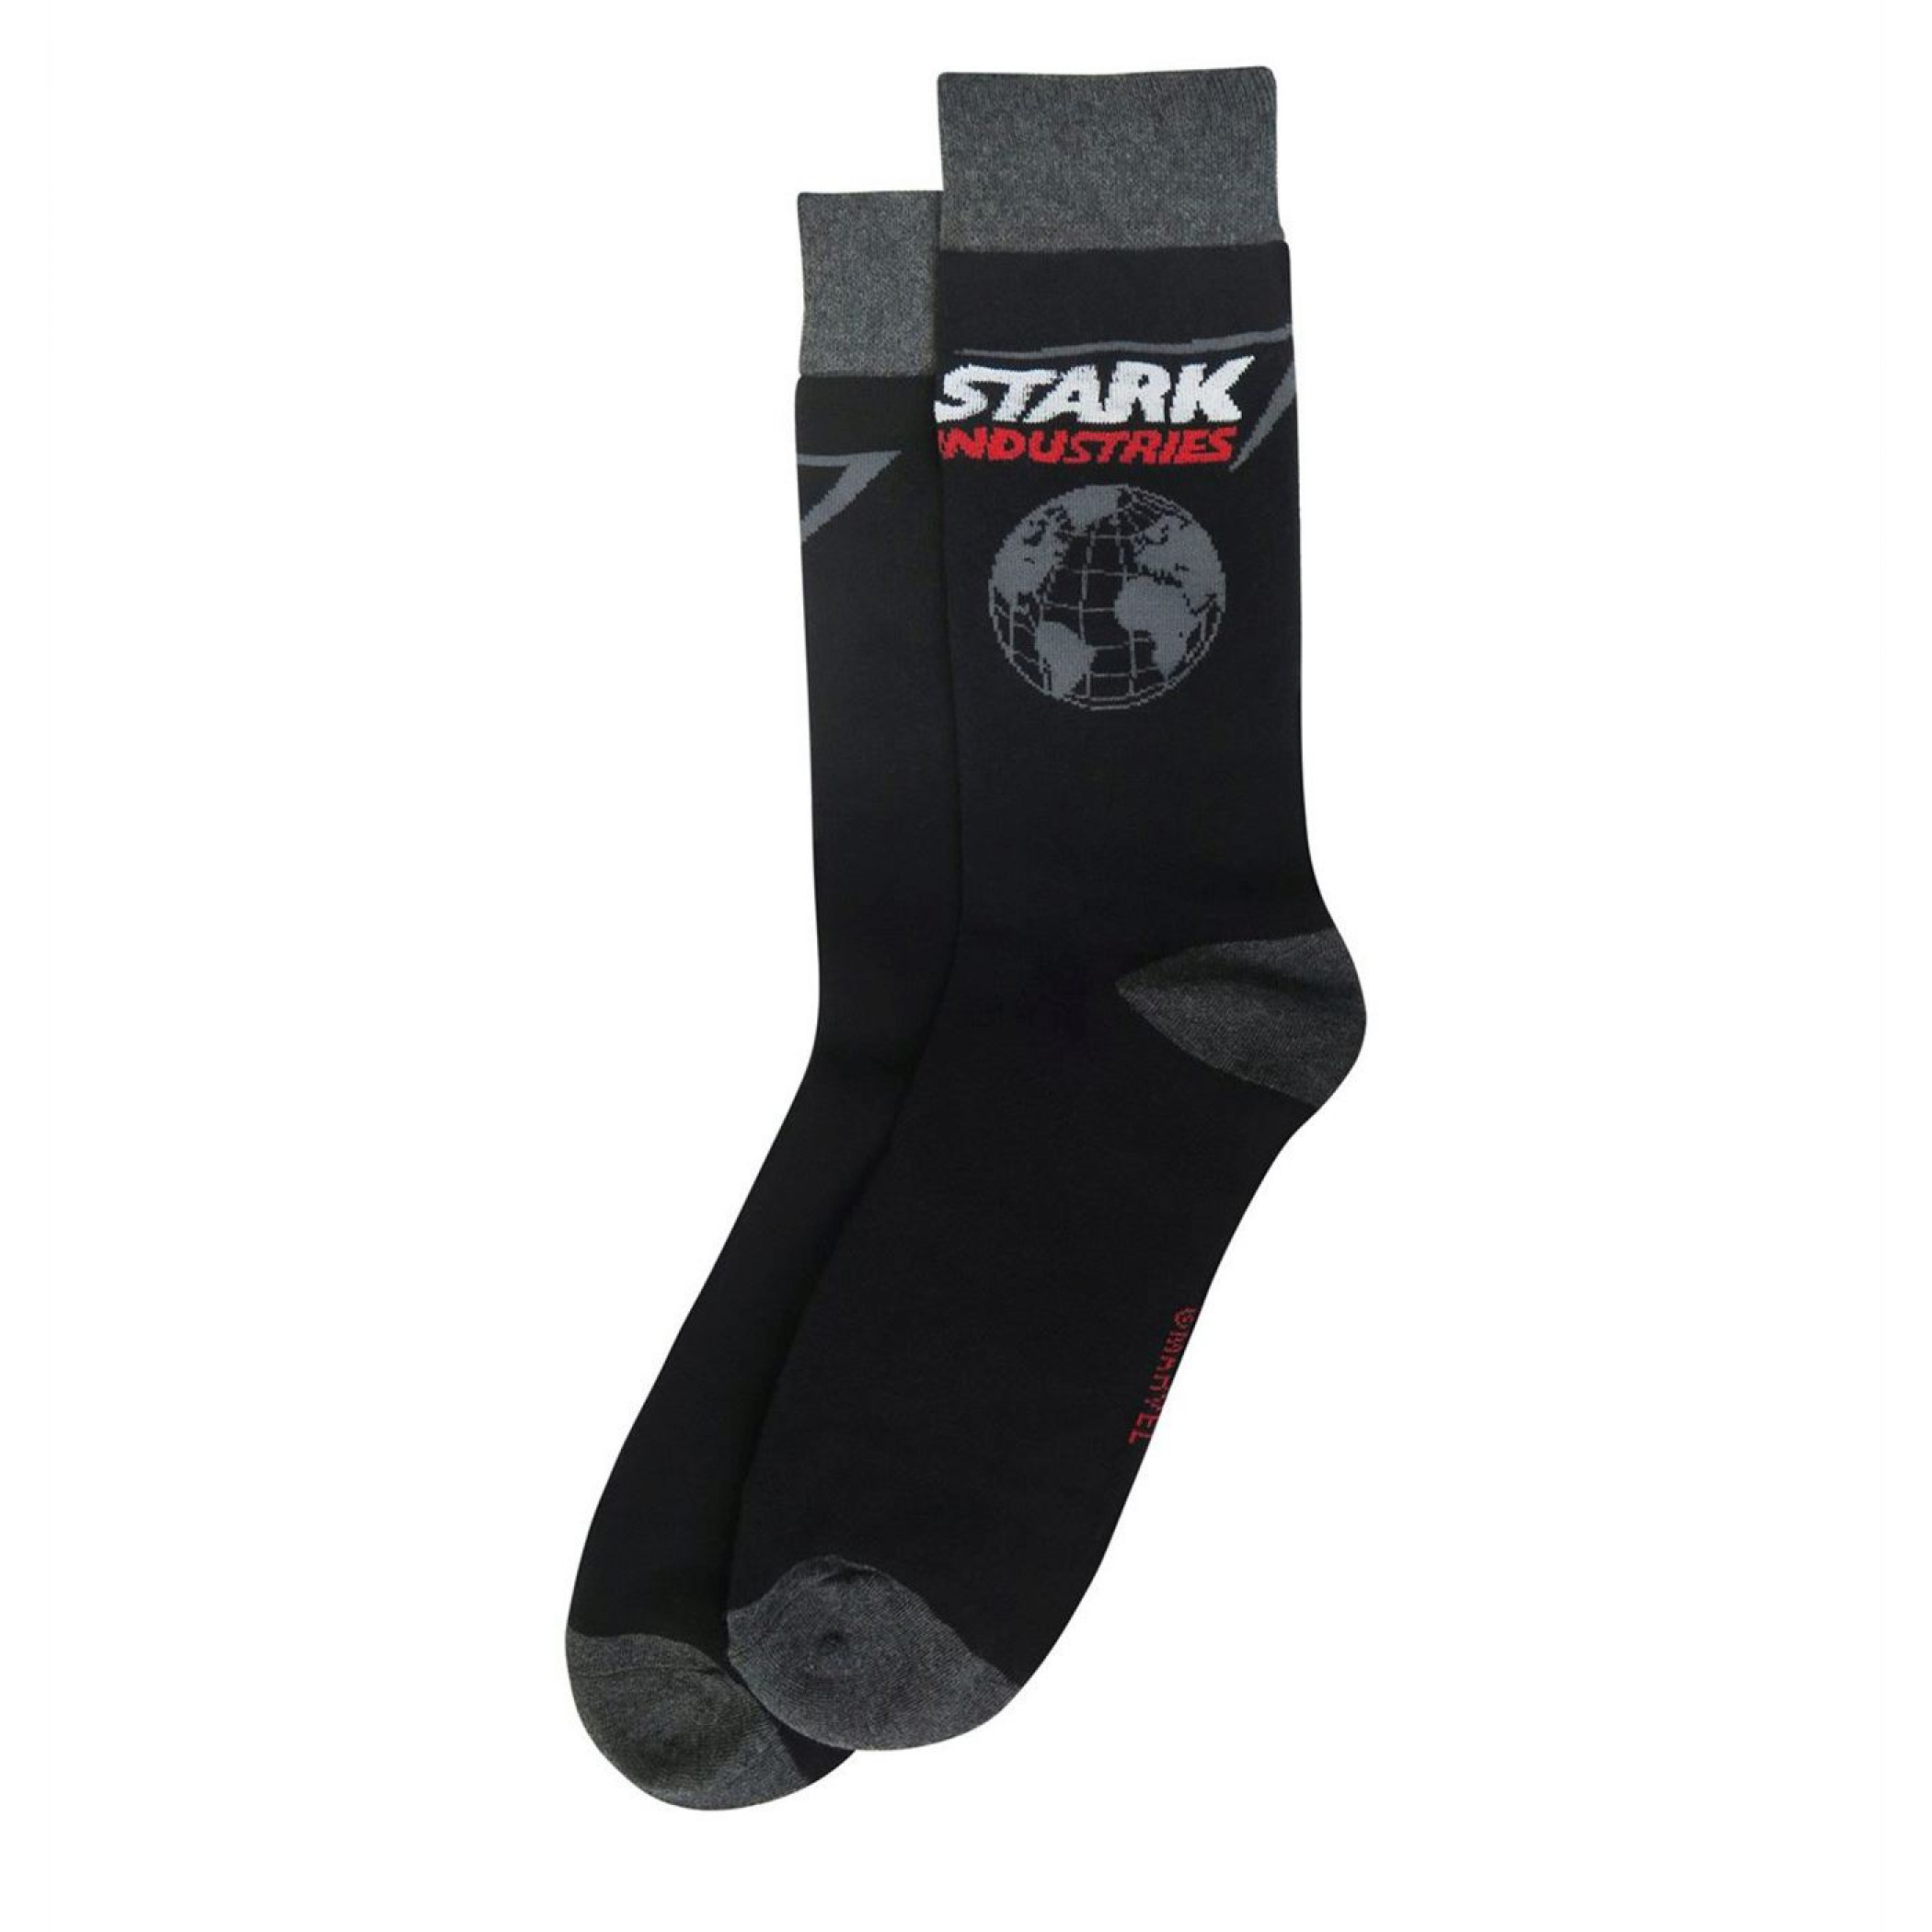 Iron Man Helmet and Stark Industries Crew Socks 2-Pair Pack